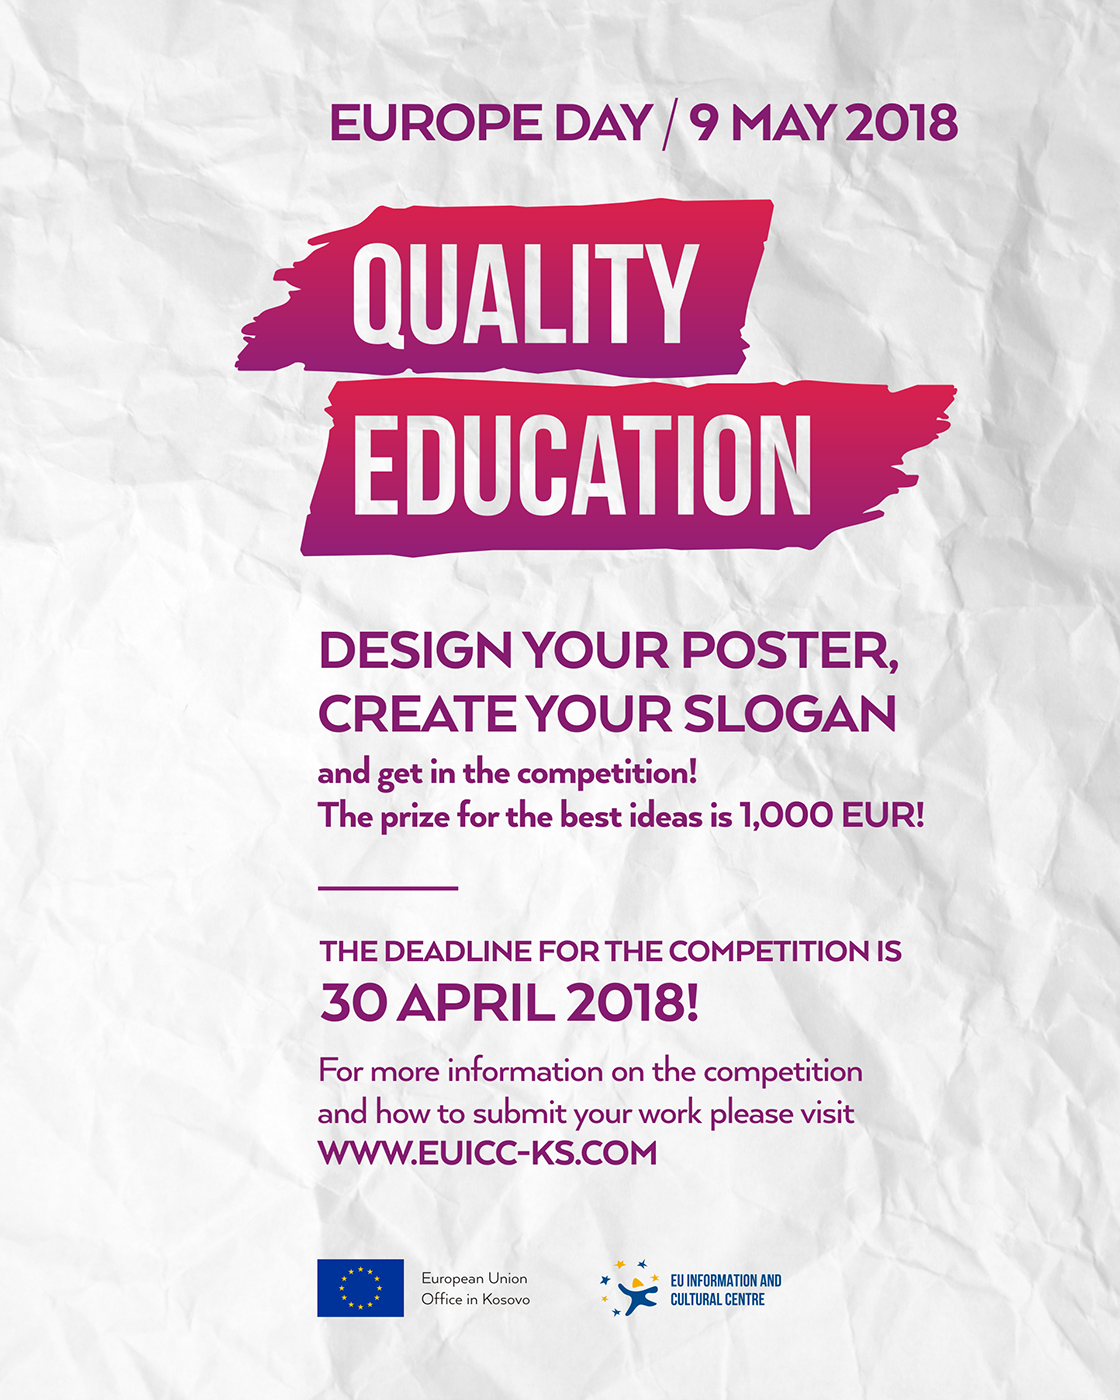 EUICC_EU DAY_poster competition_eng